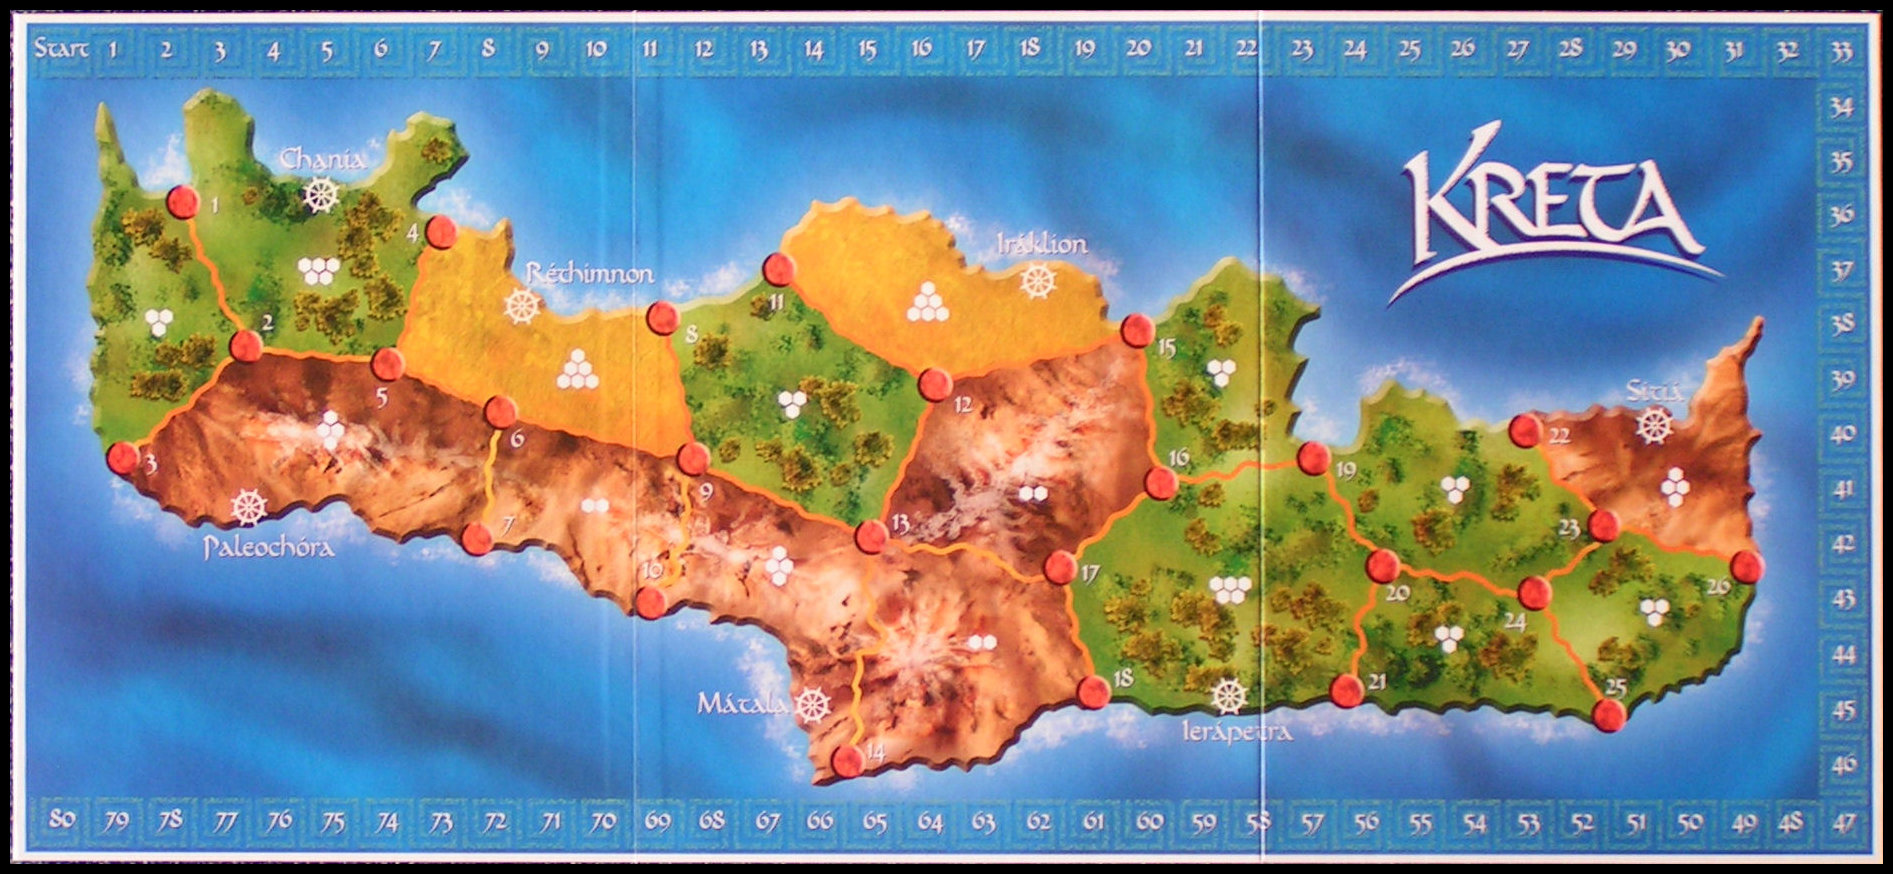 Kreta - The Game Board